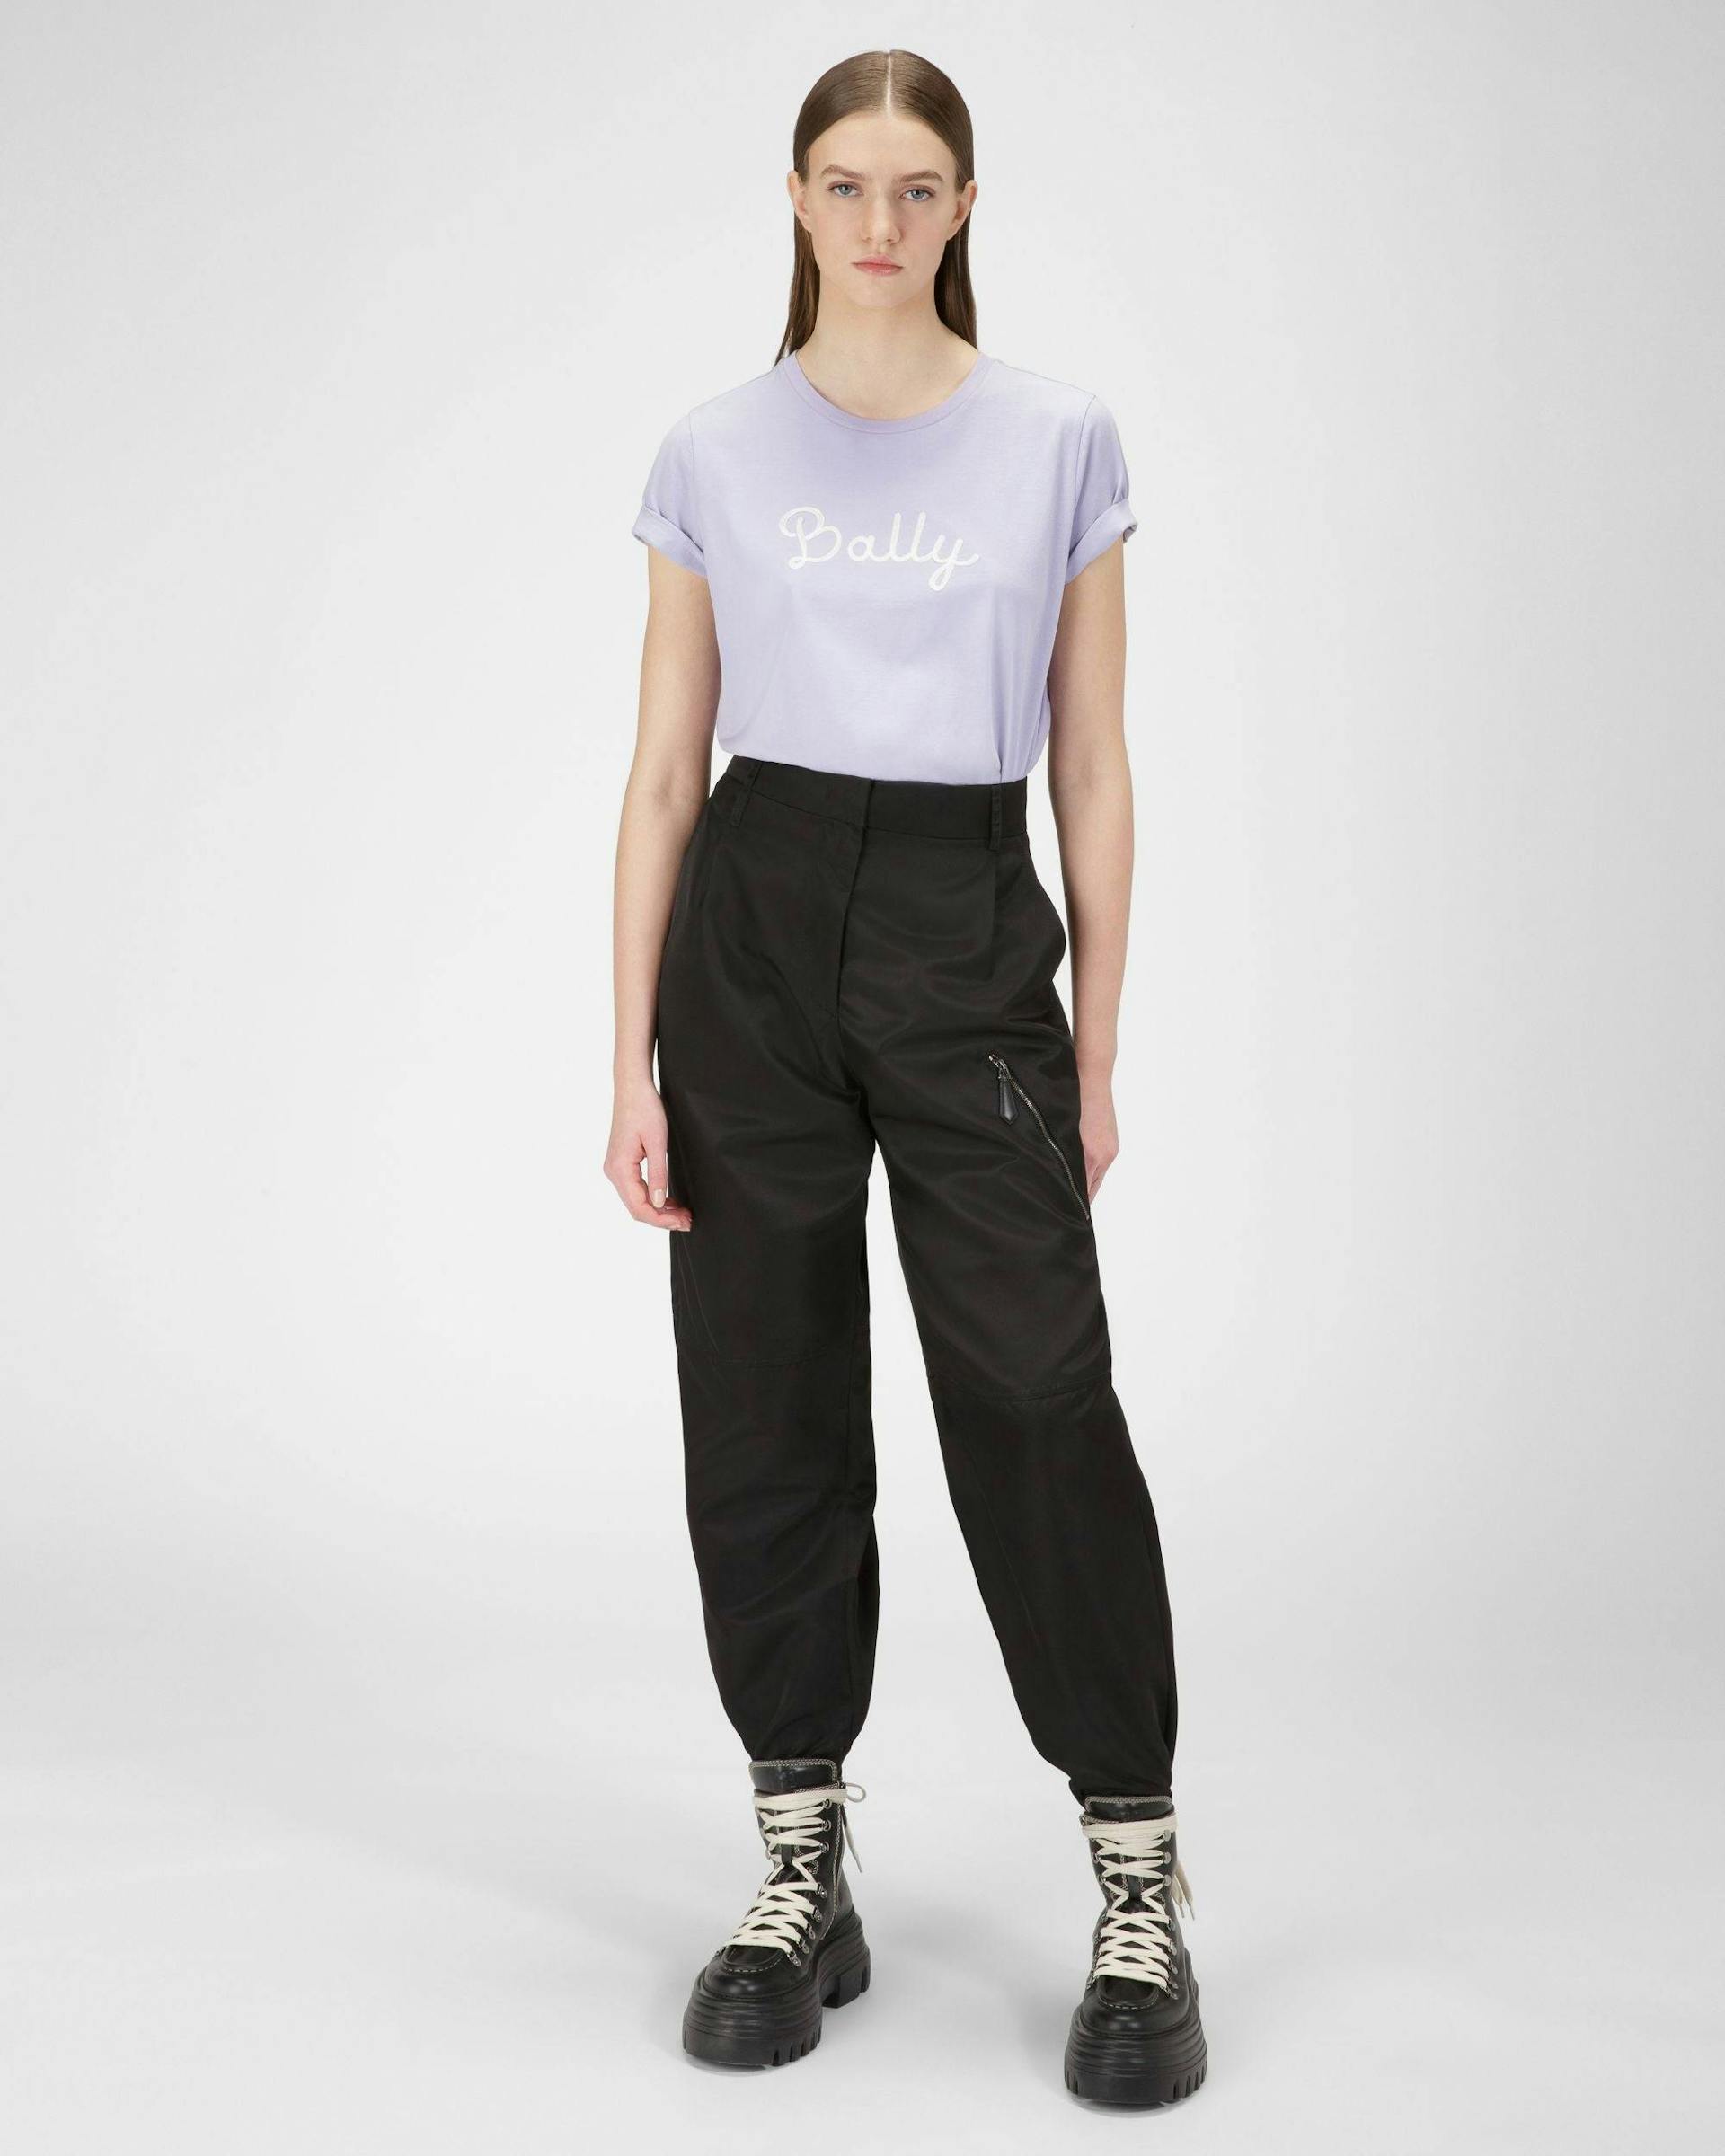 T-Shirt En Coton Violet - Femme - Bally - 05